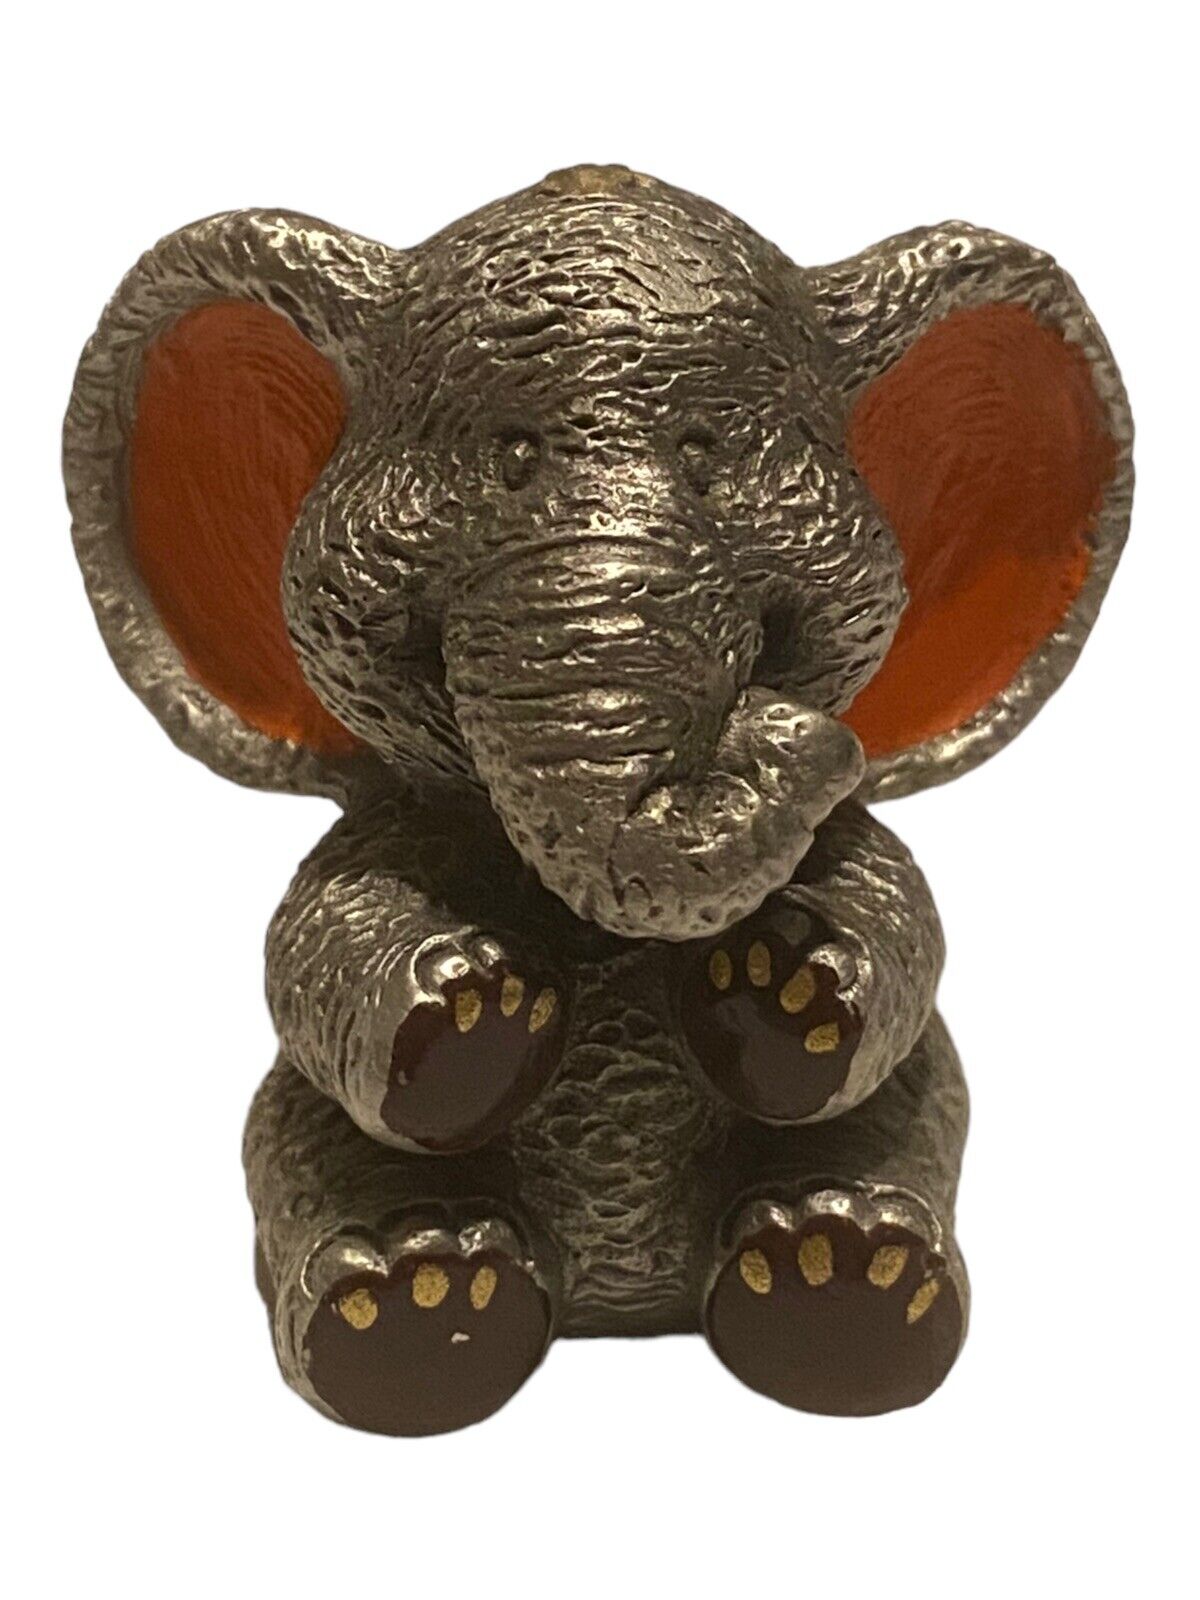 Adorable Metal Elephant Sculpture Figurine Approximately 1.75”